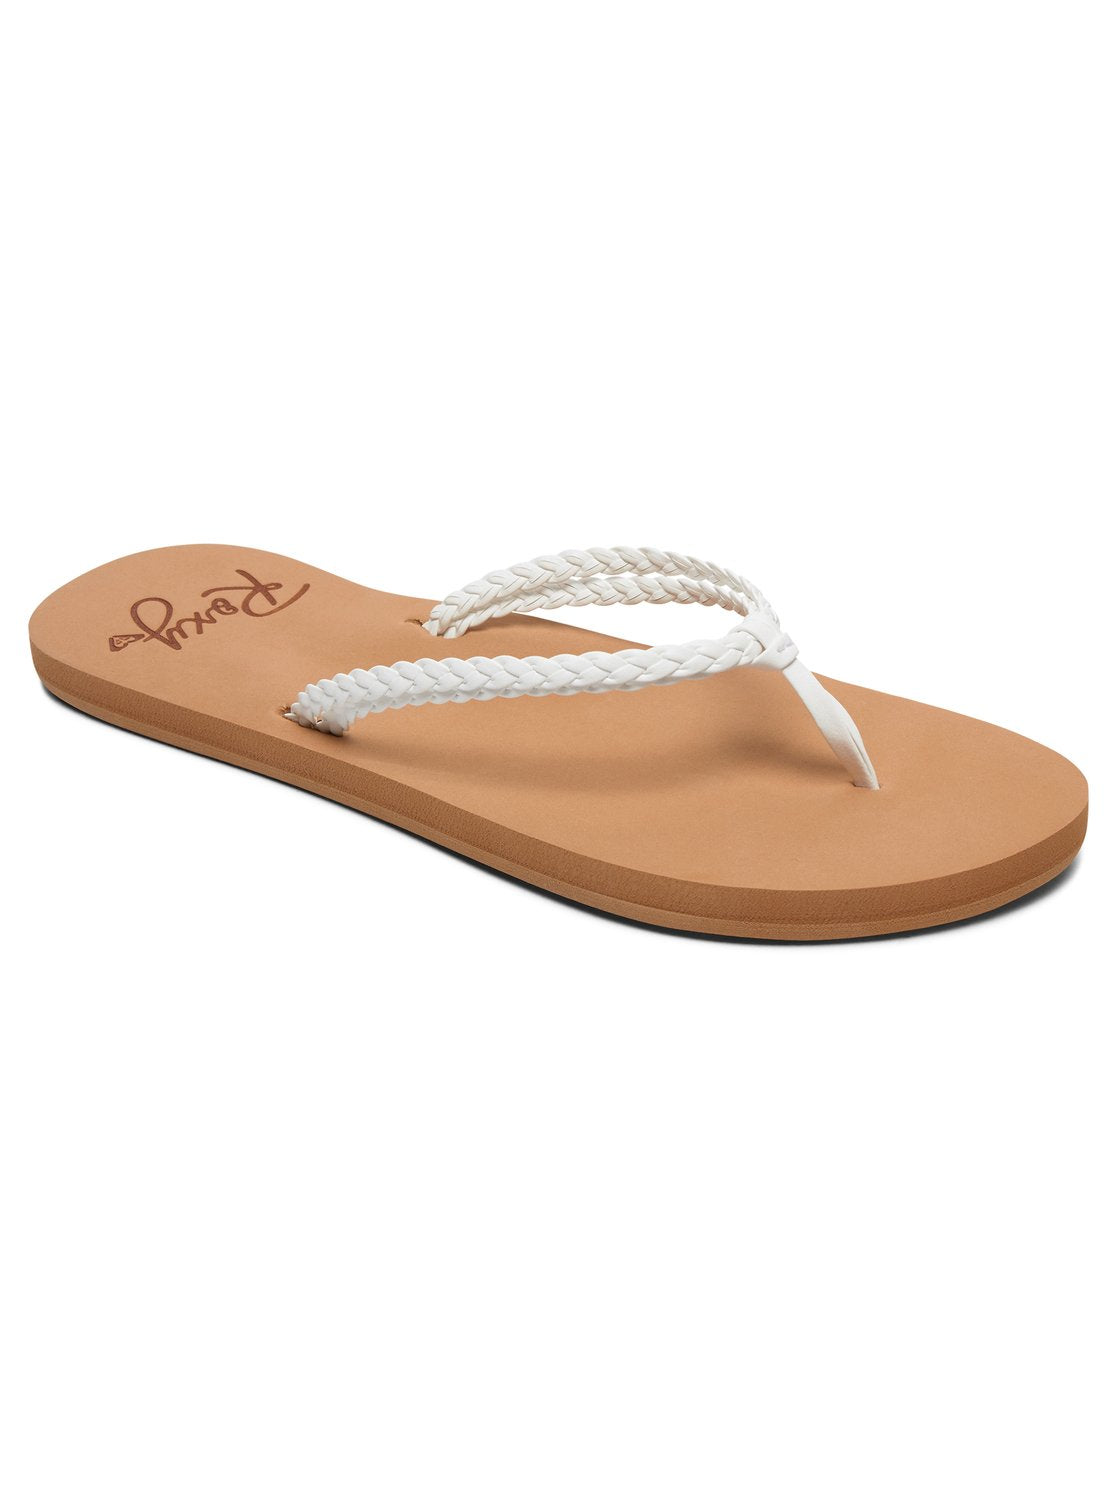 Roxy Costas Womens Sandal WHT-White 11